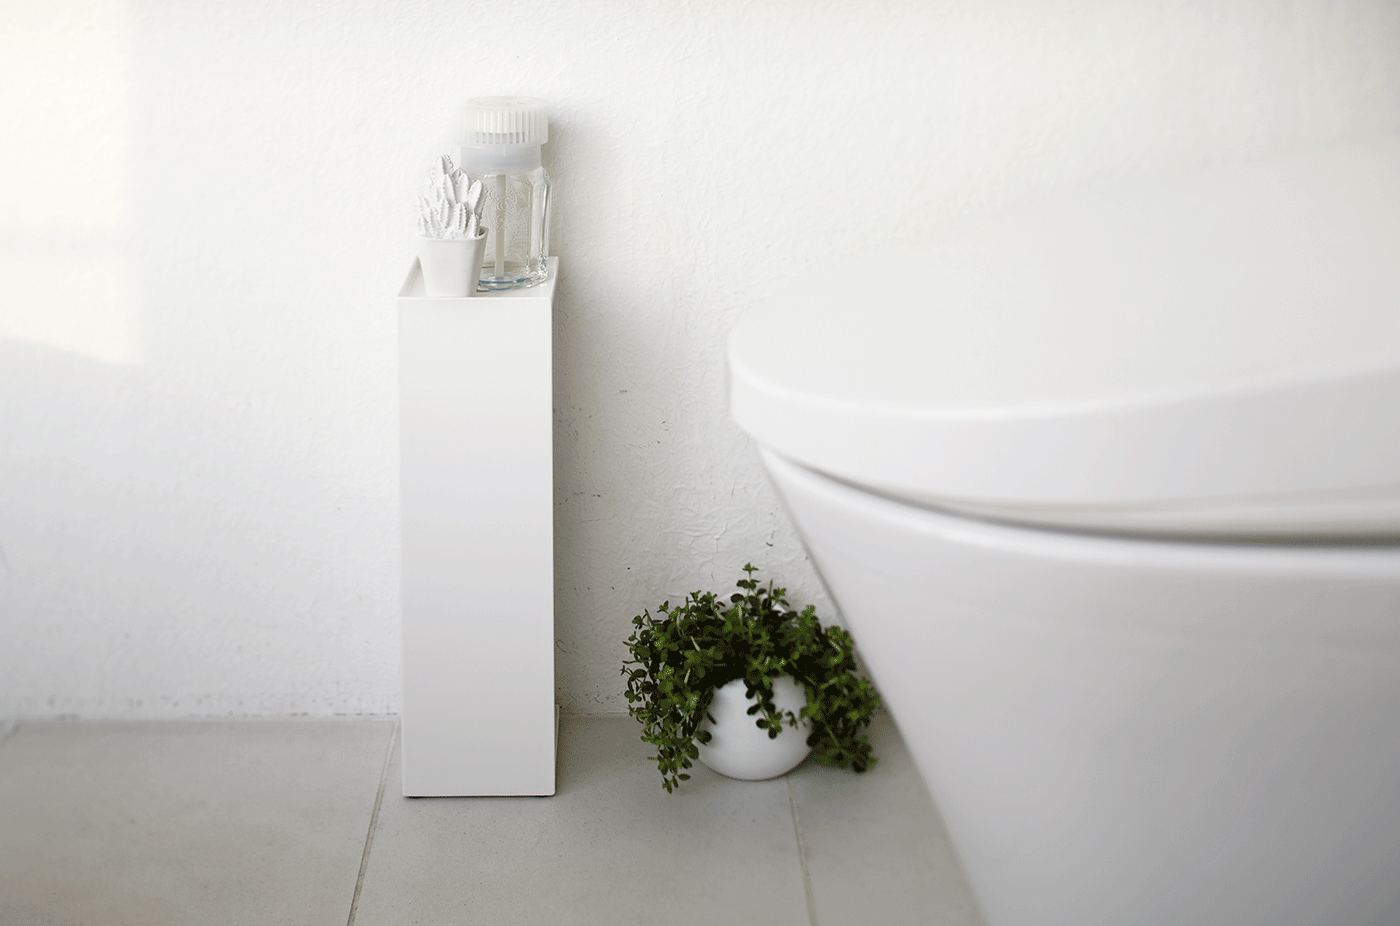 Yamazaki Toilet Paper Storage